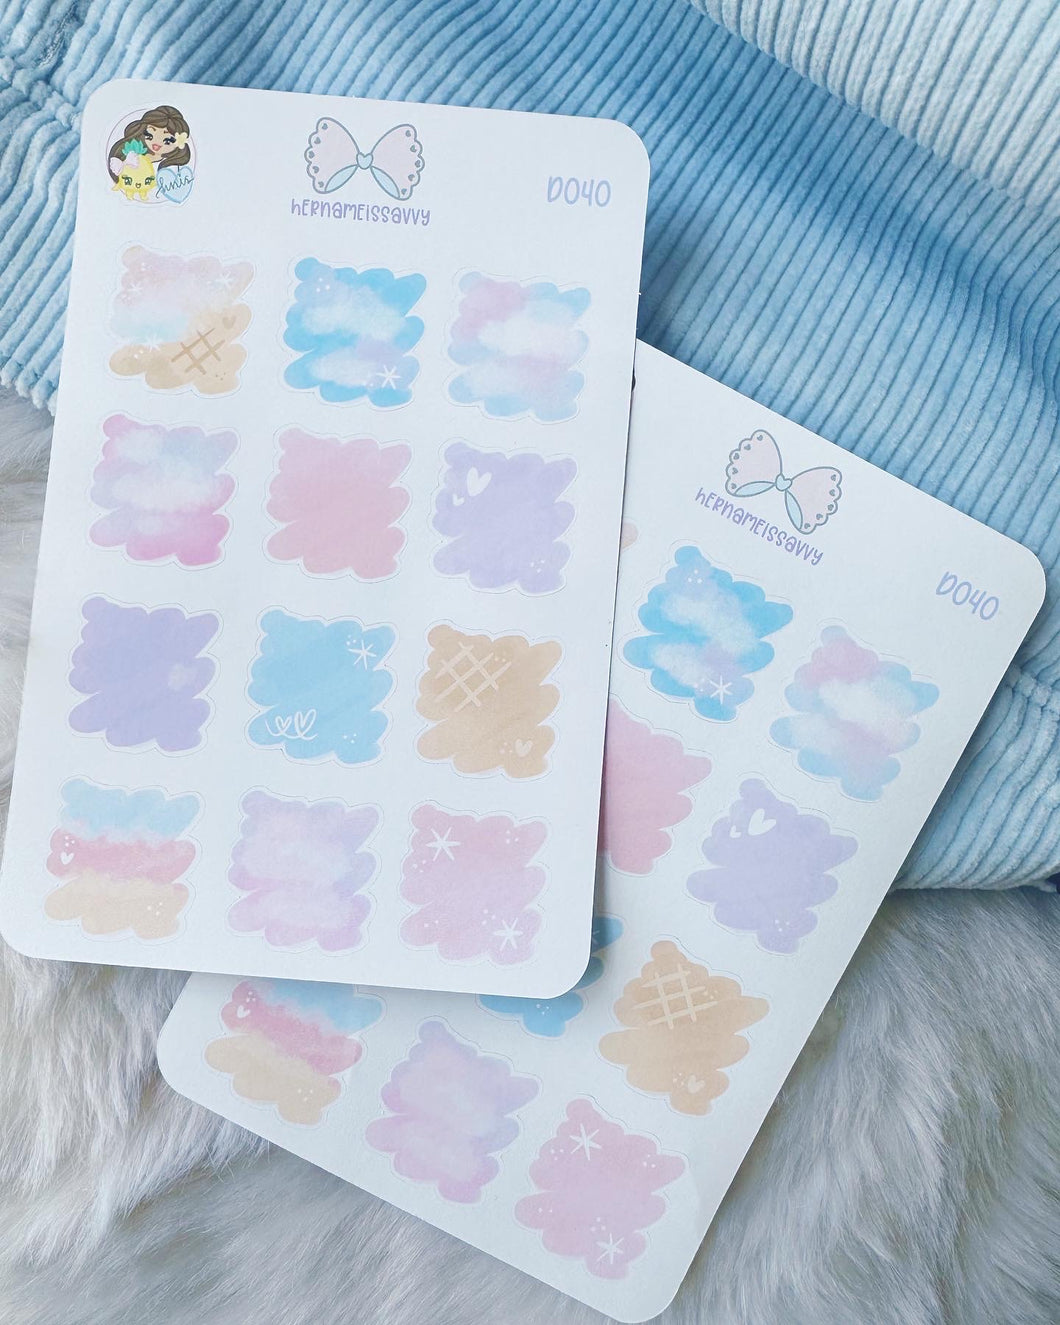 D040 - Cotton Candy Swatches Sticker Sheet